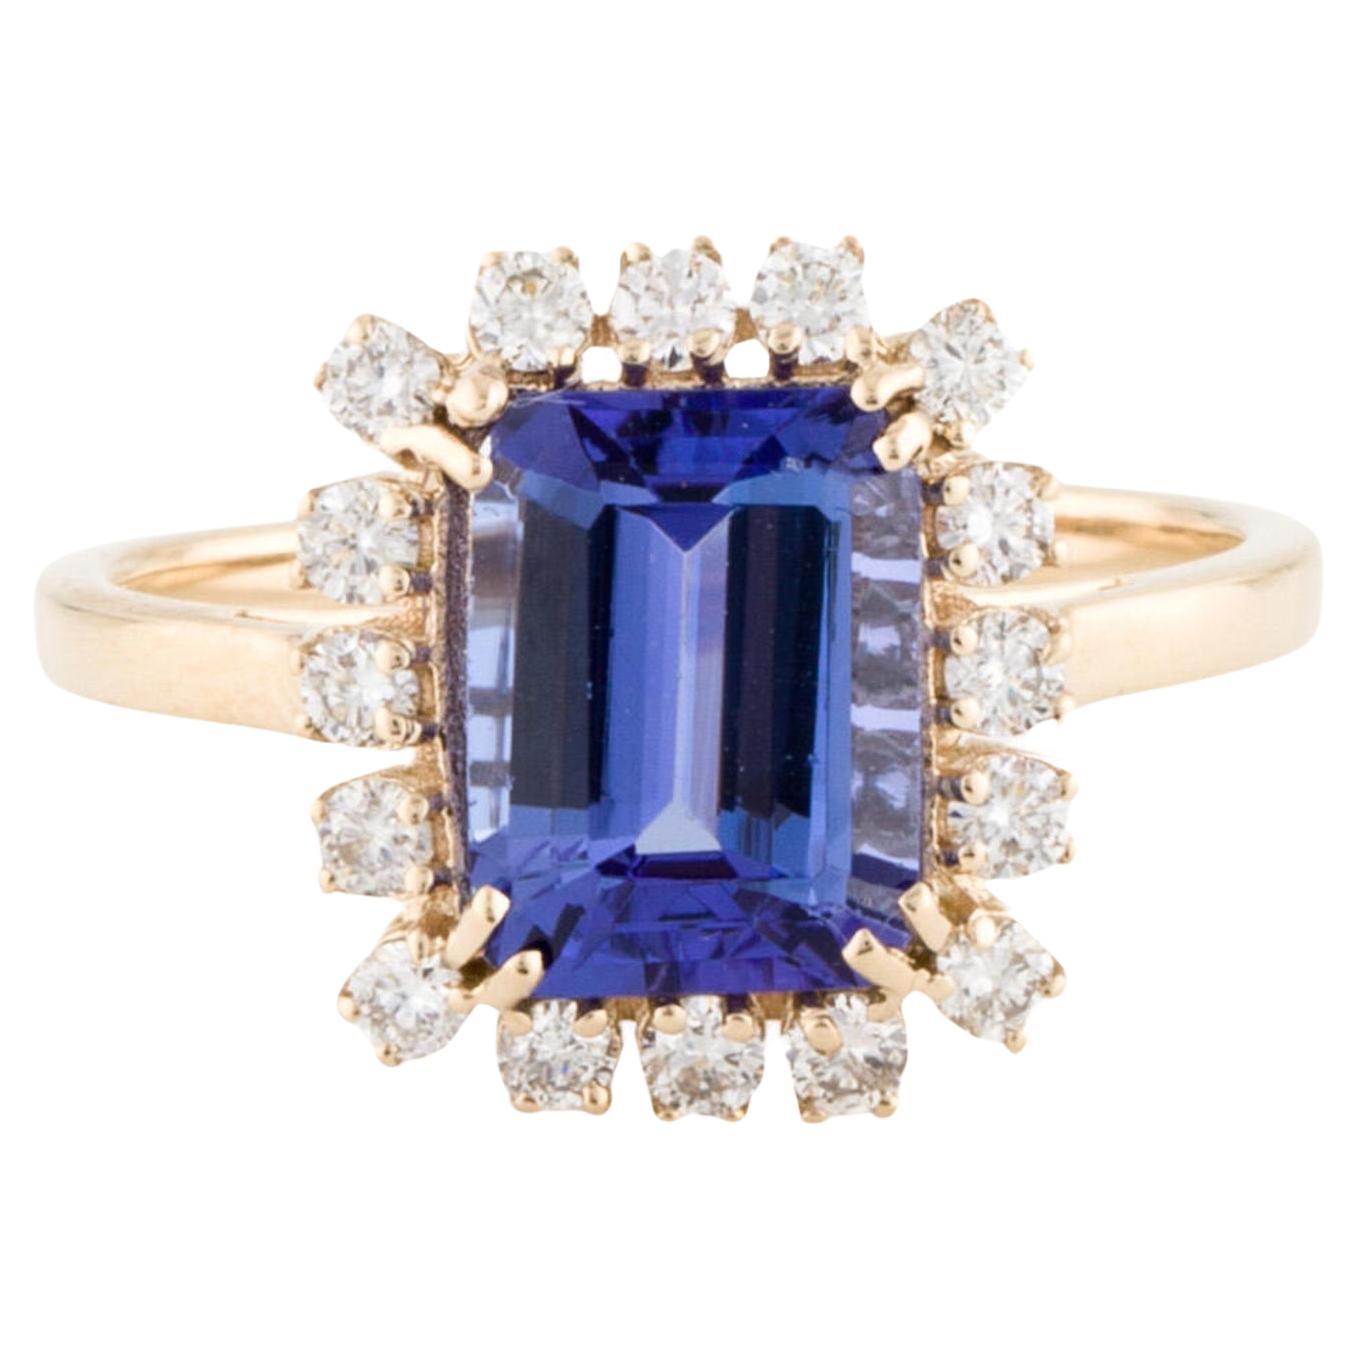 14K Tanzanite & Diamond Cocktail Ring 2.32ctw - Size 6.75 - Elegant Jewelry